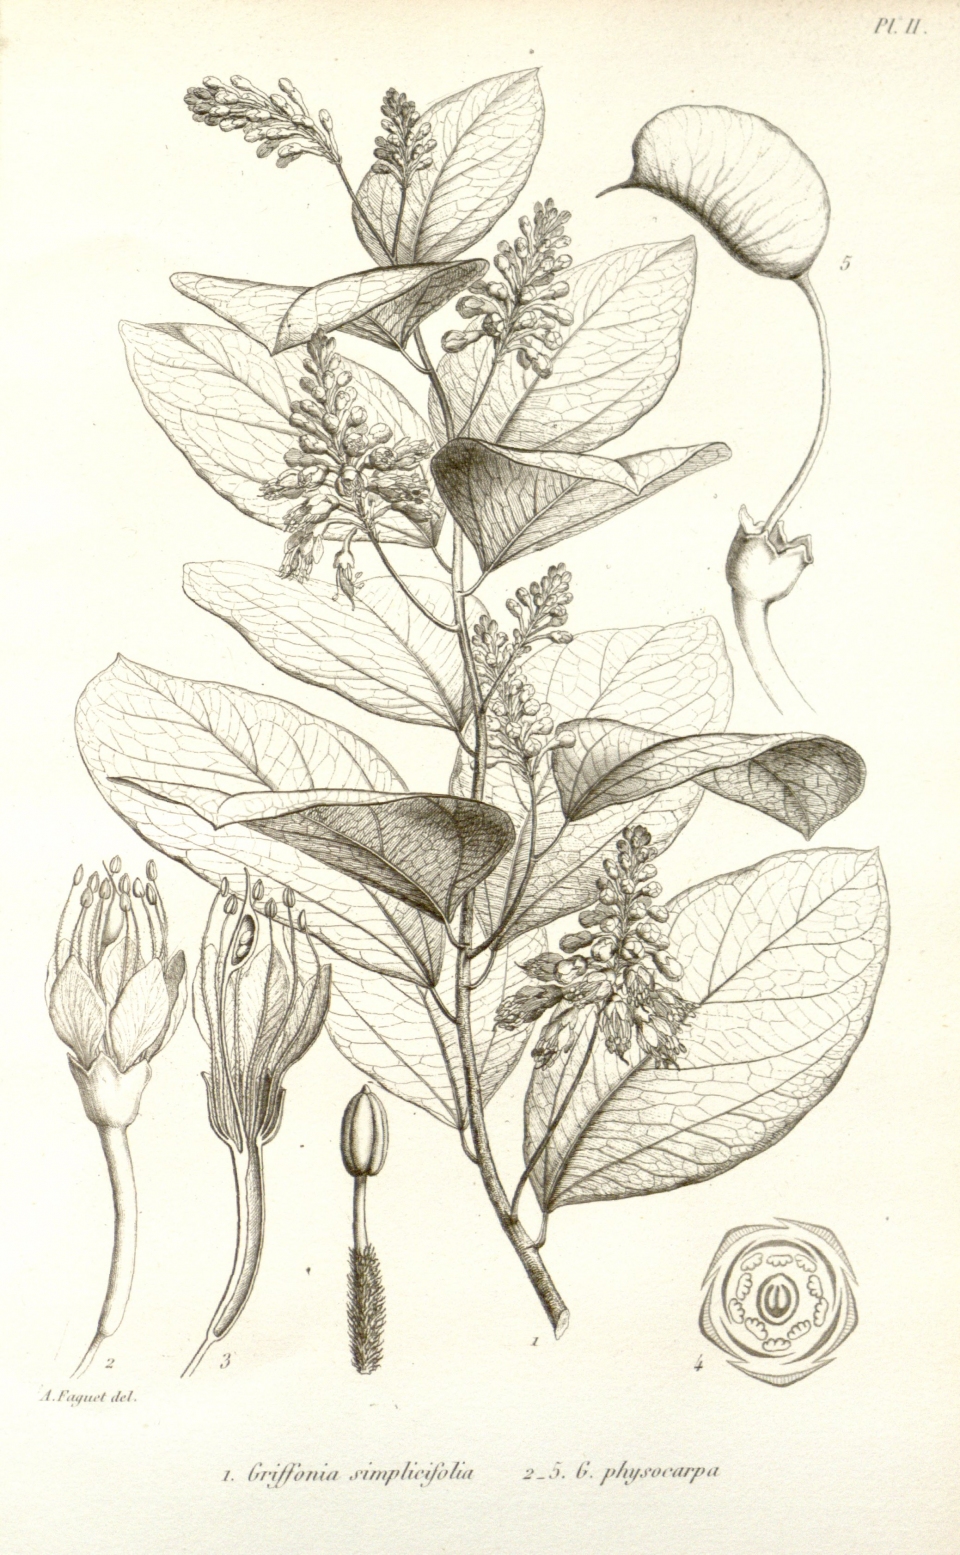 Griffonia physocarpa